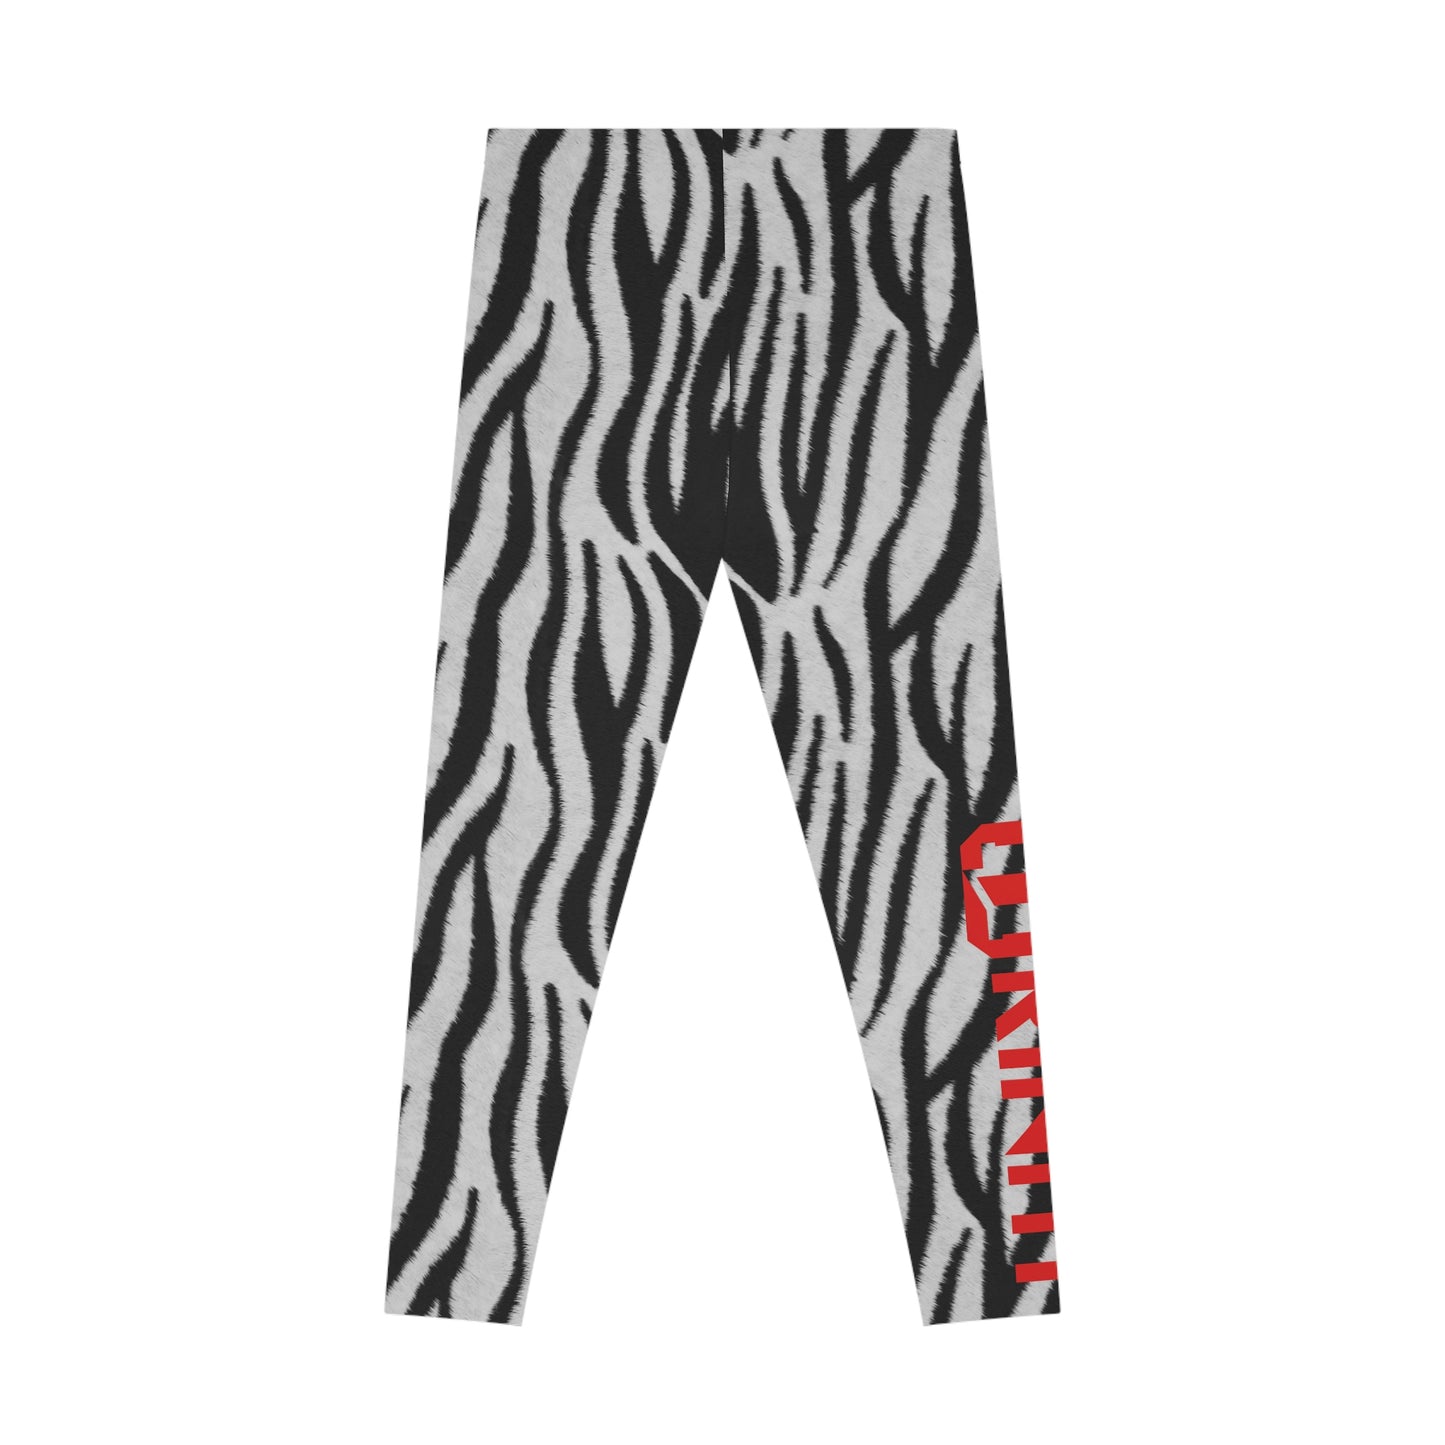 Womens Triniti Zebra leggings